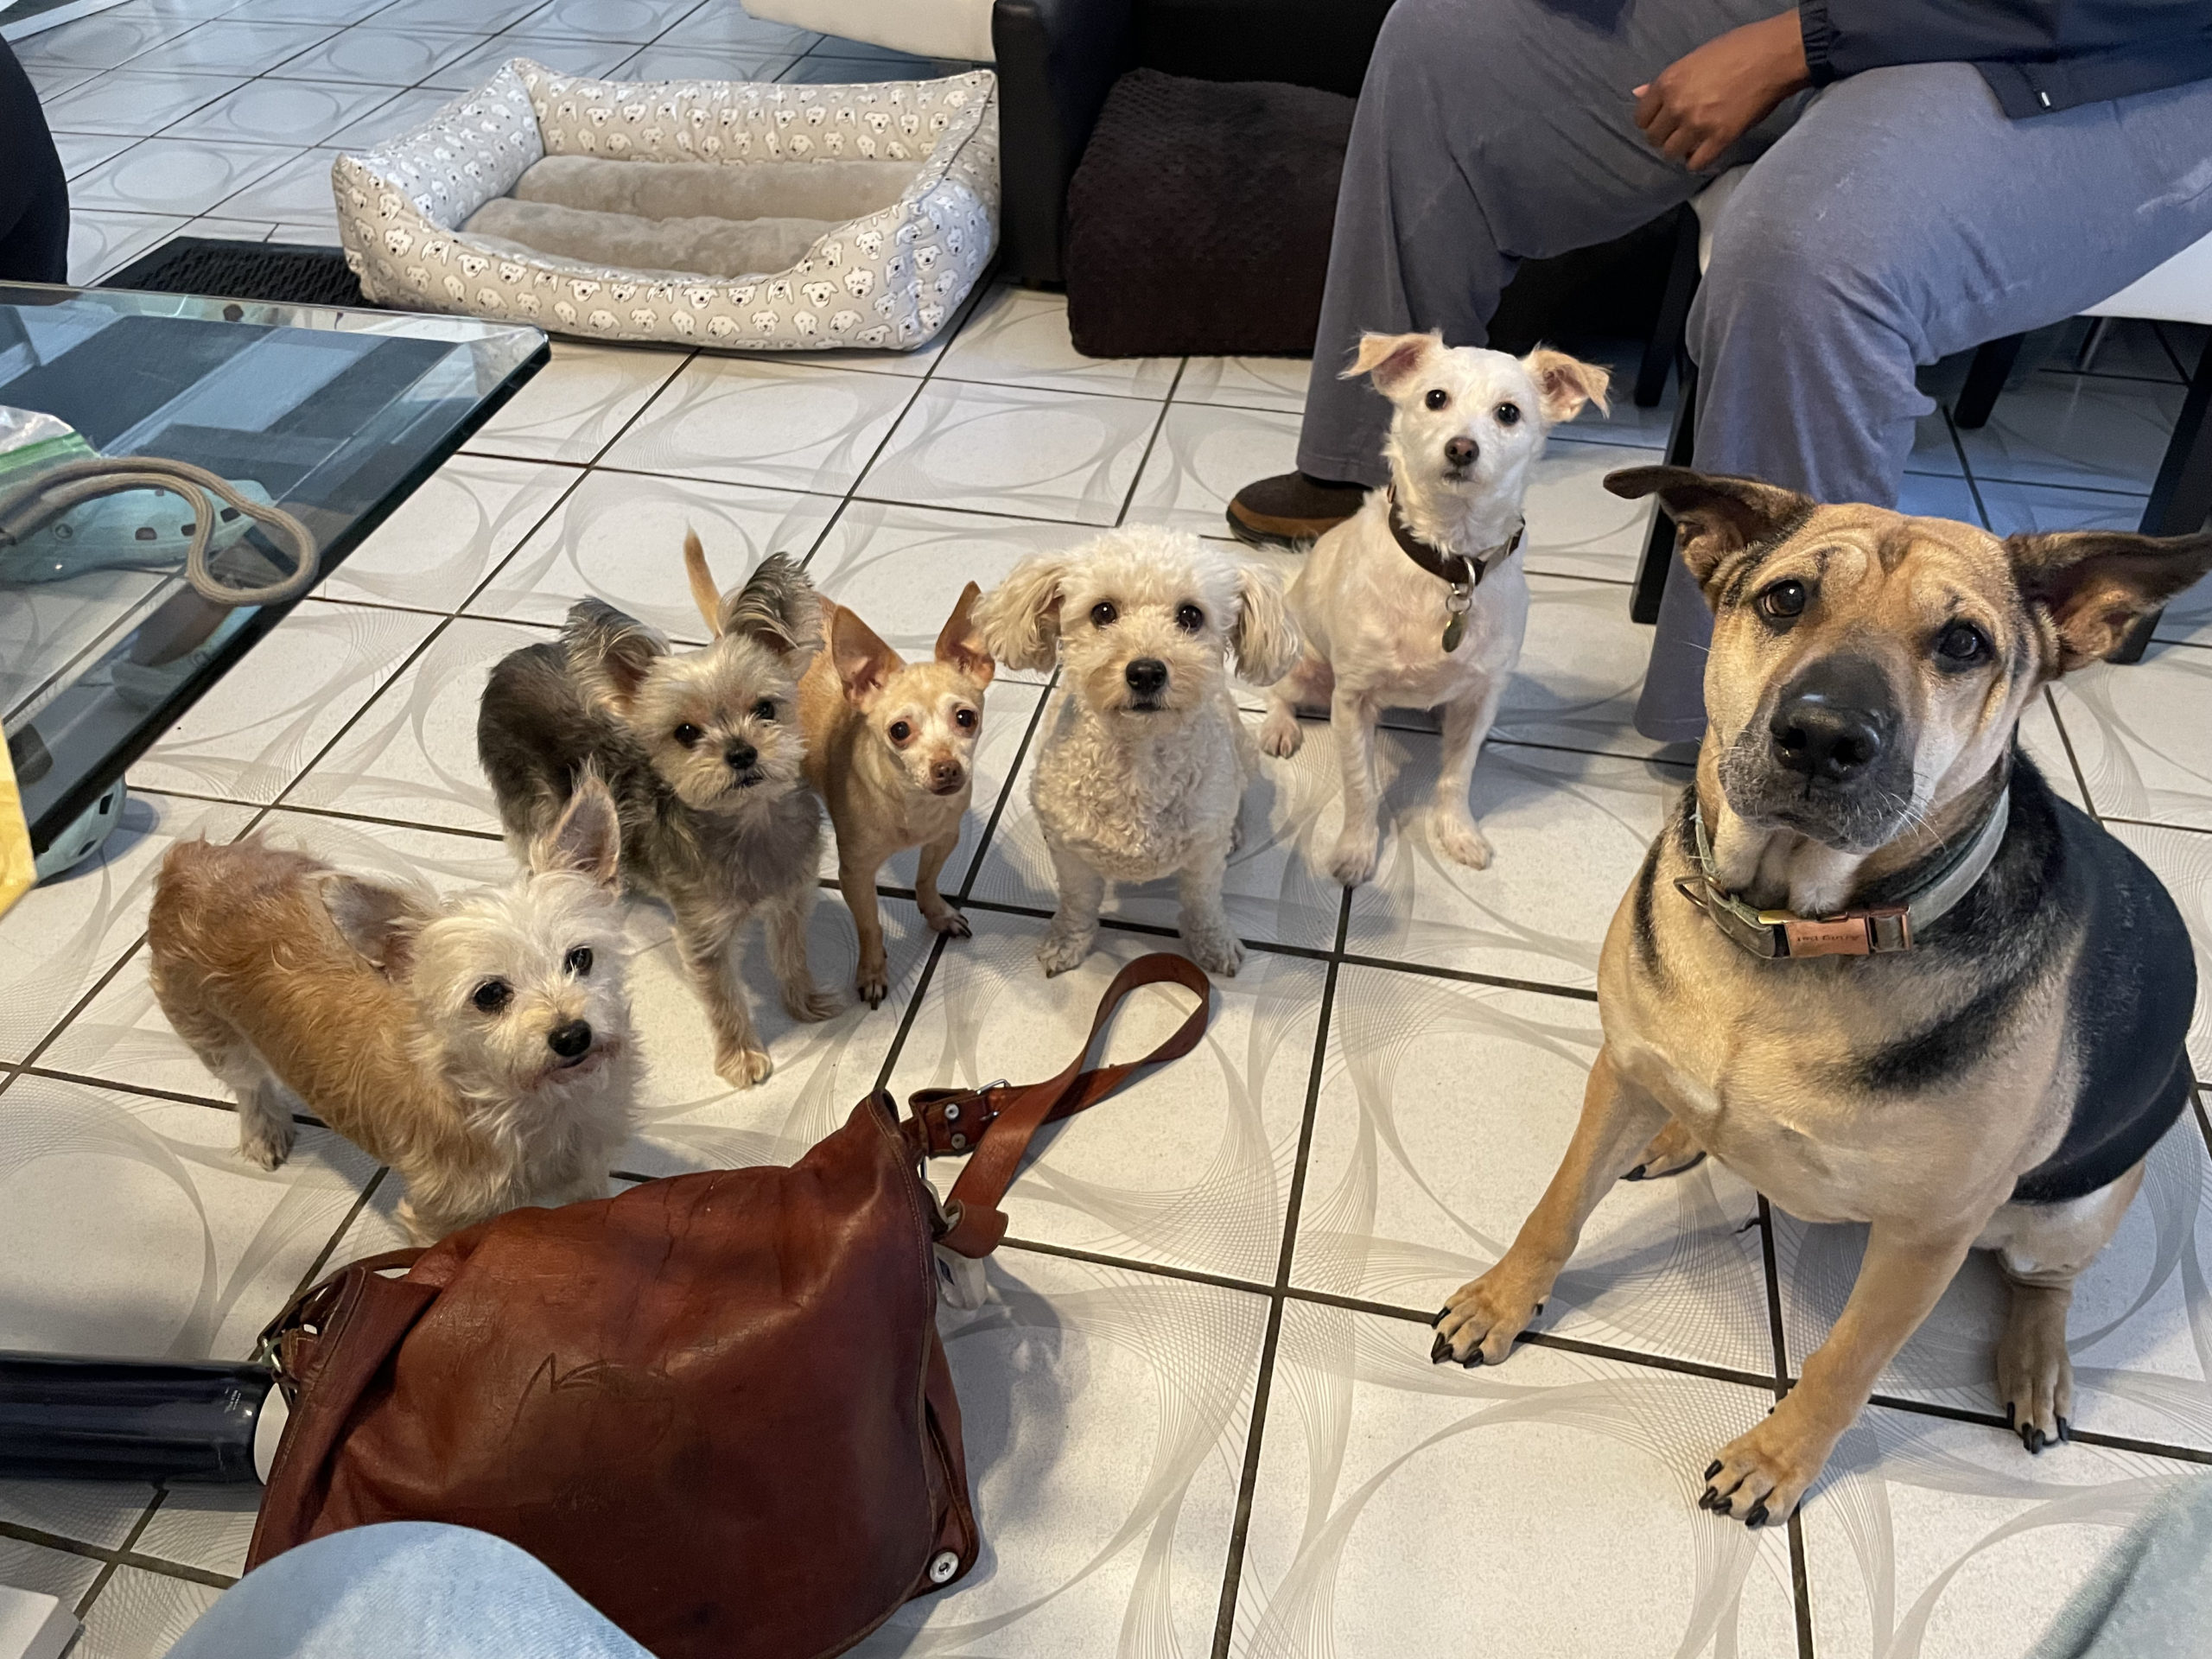 Oliver AJ Lady Sage Zoyla Brooklyn scaled - Teaching Some West LA Dogs to Stop Barking